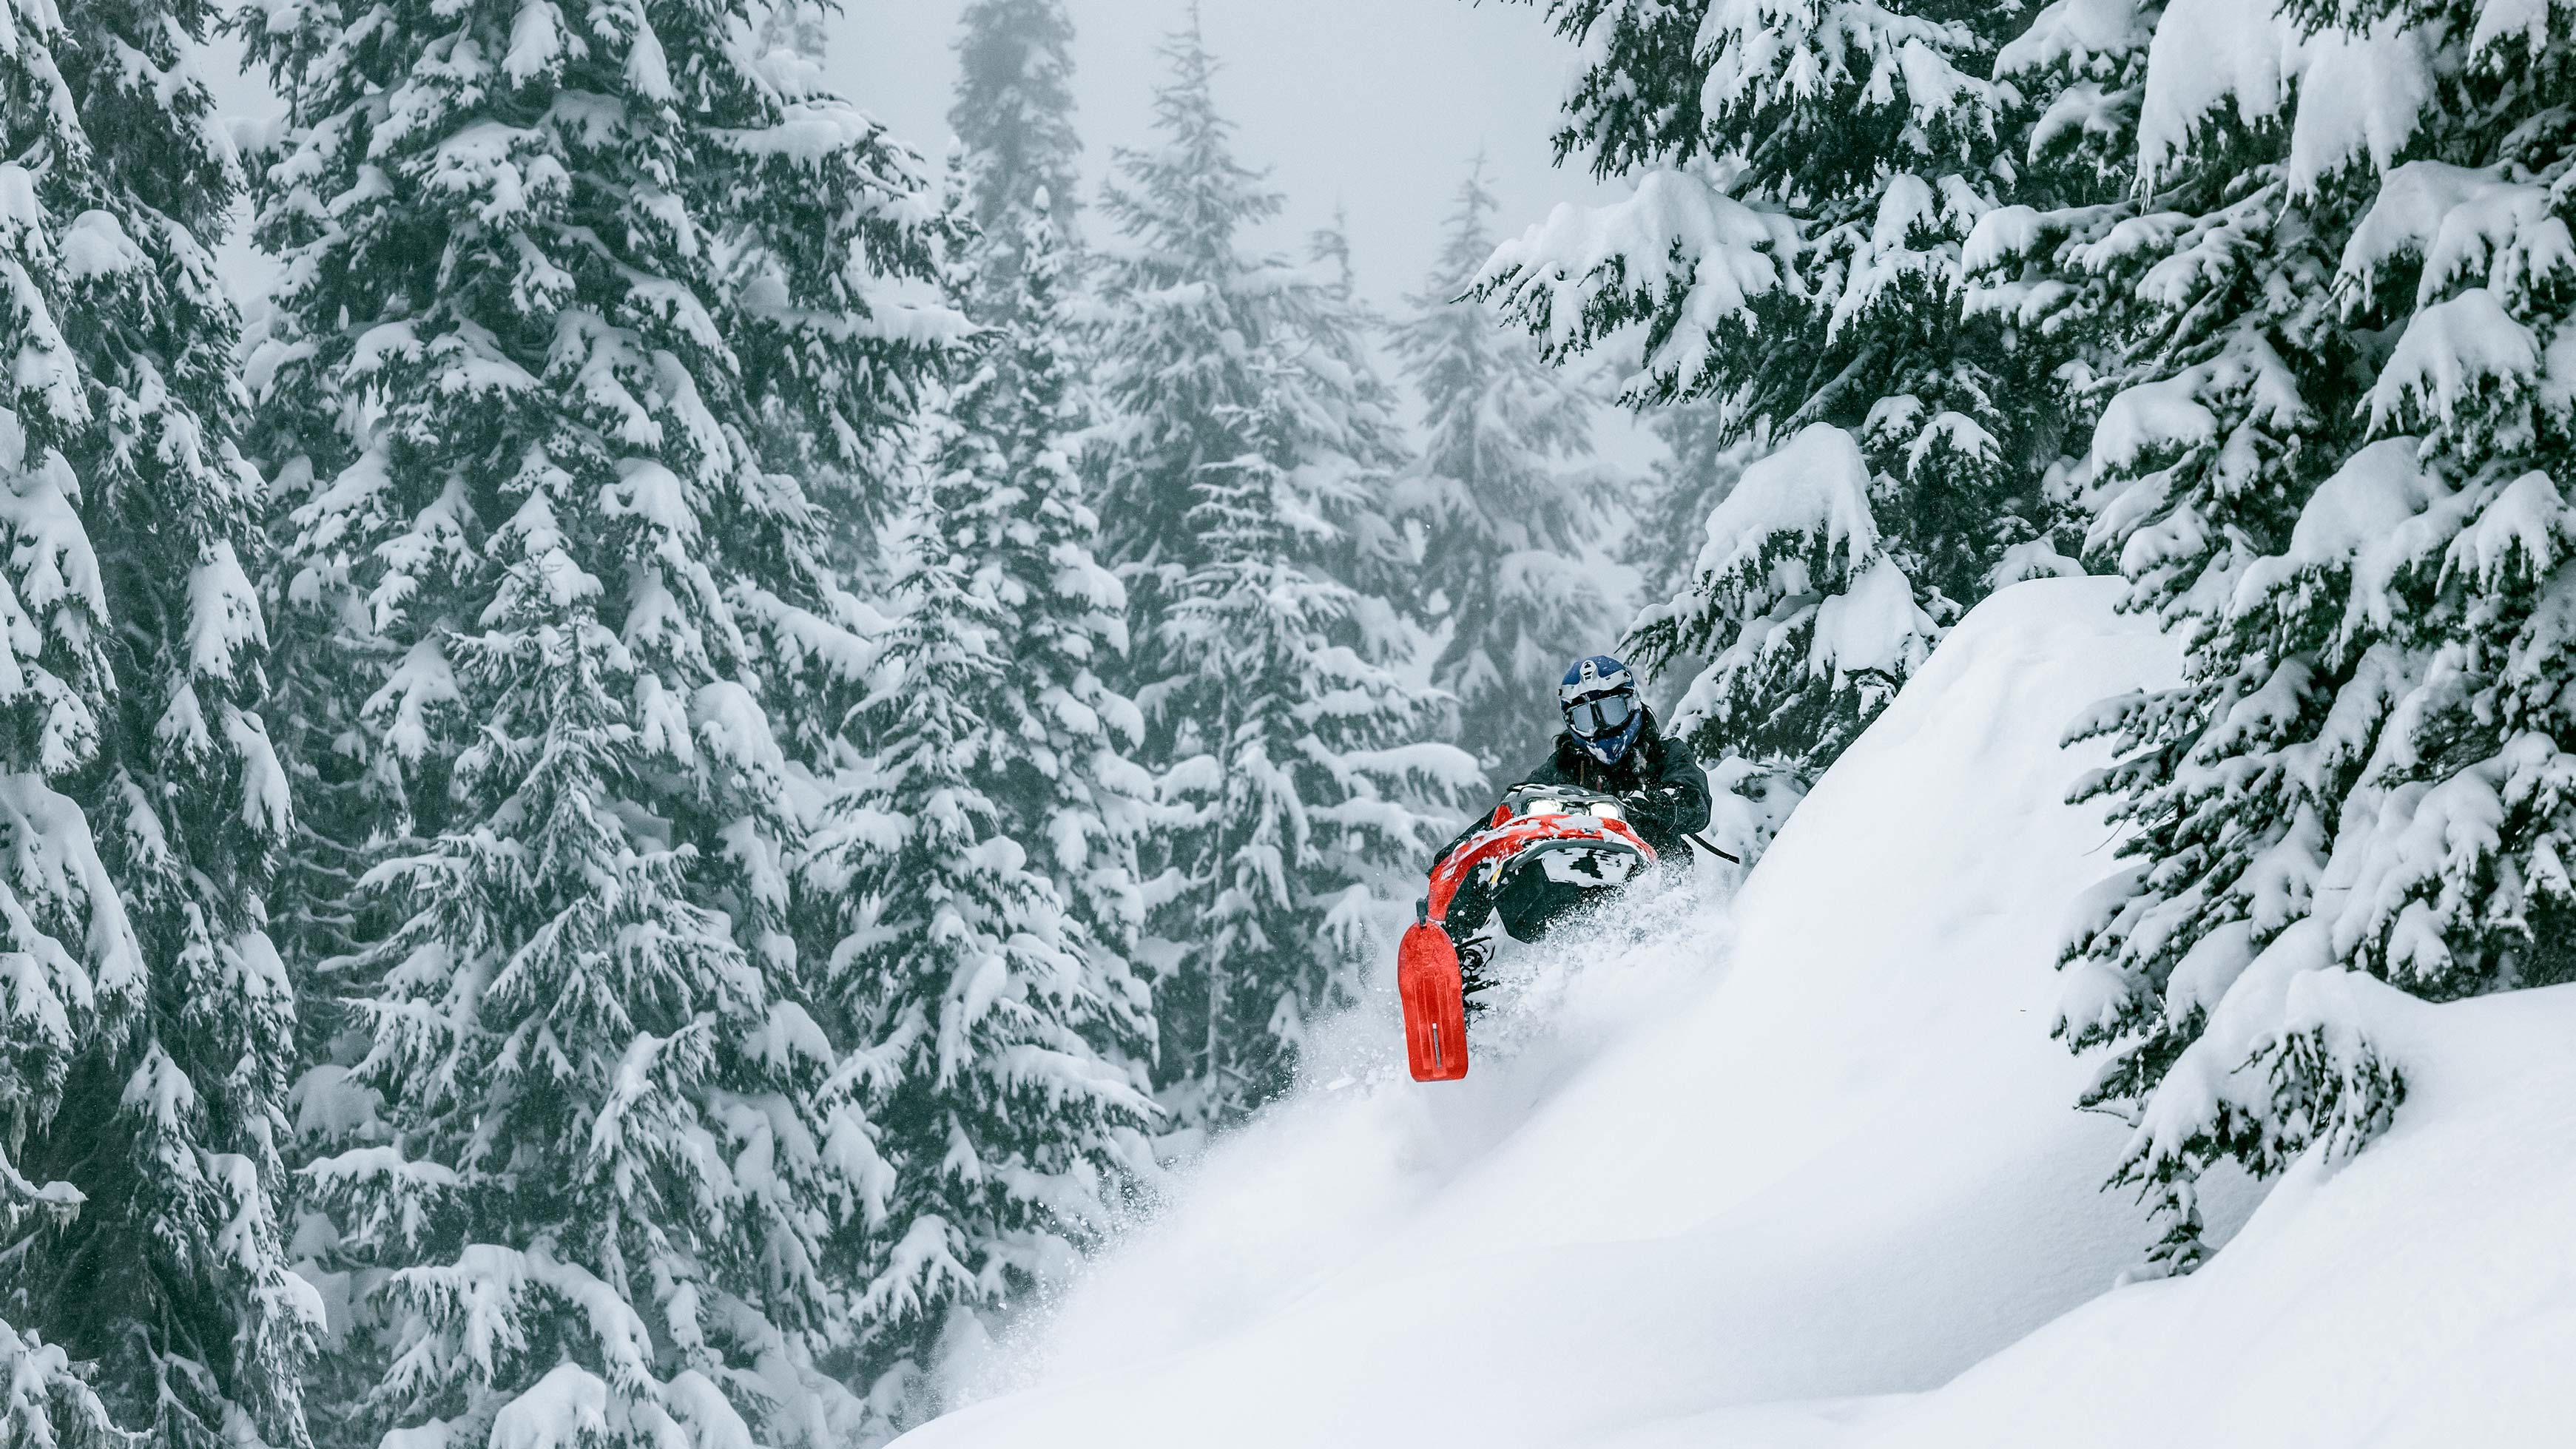 Jason Ribi riding a Lynx Shredder in deep snow